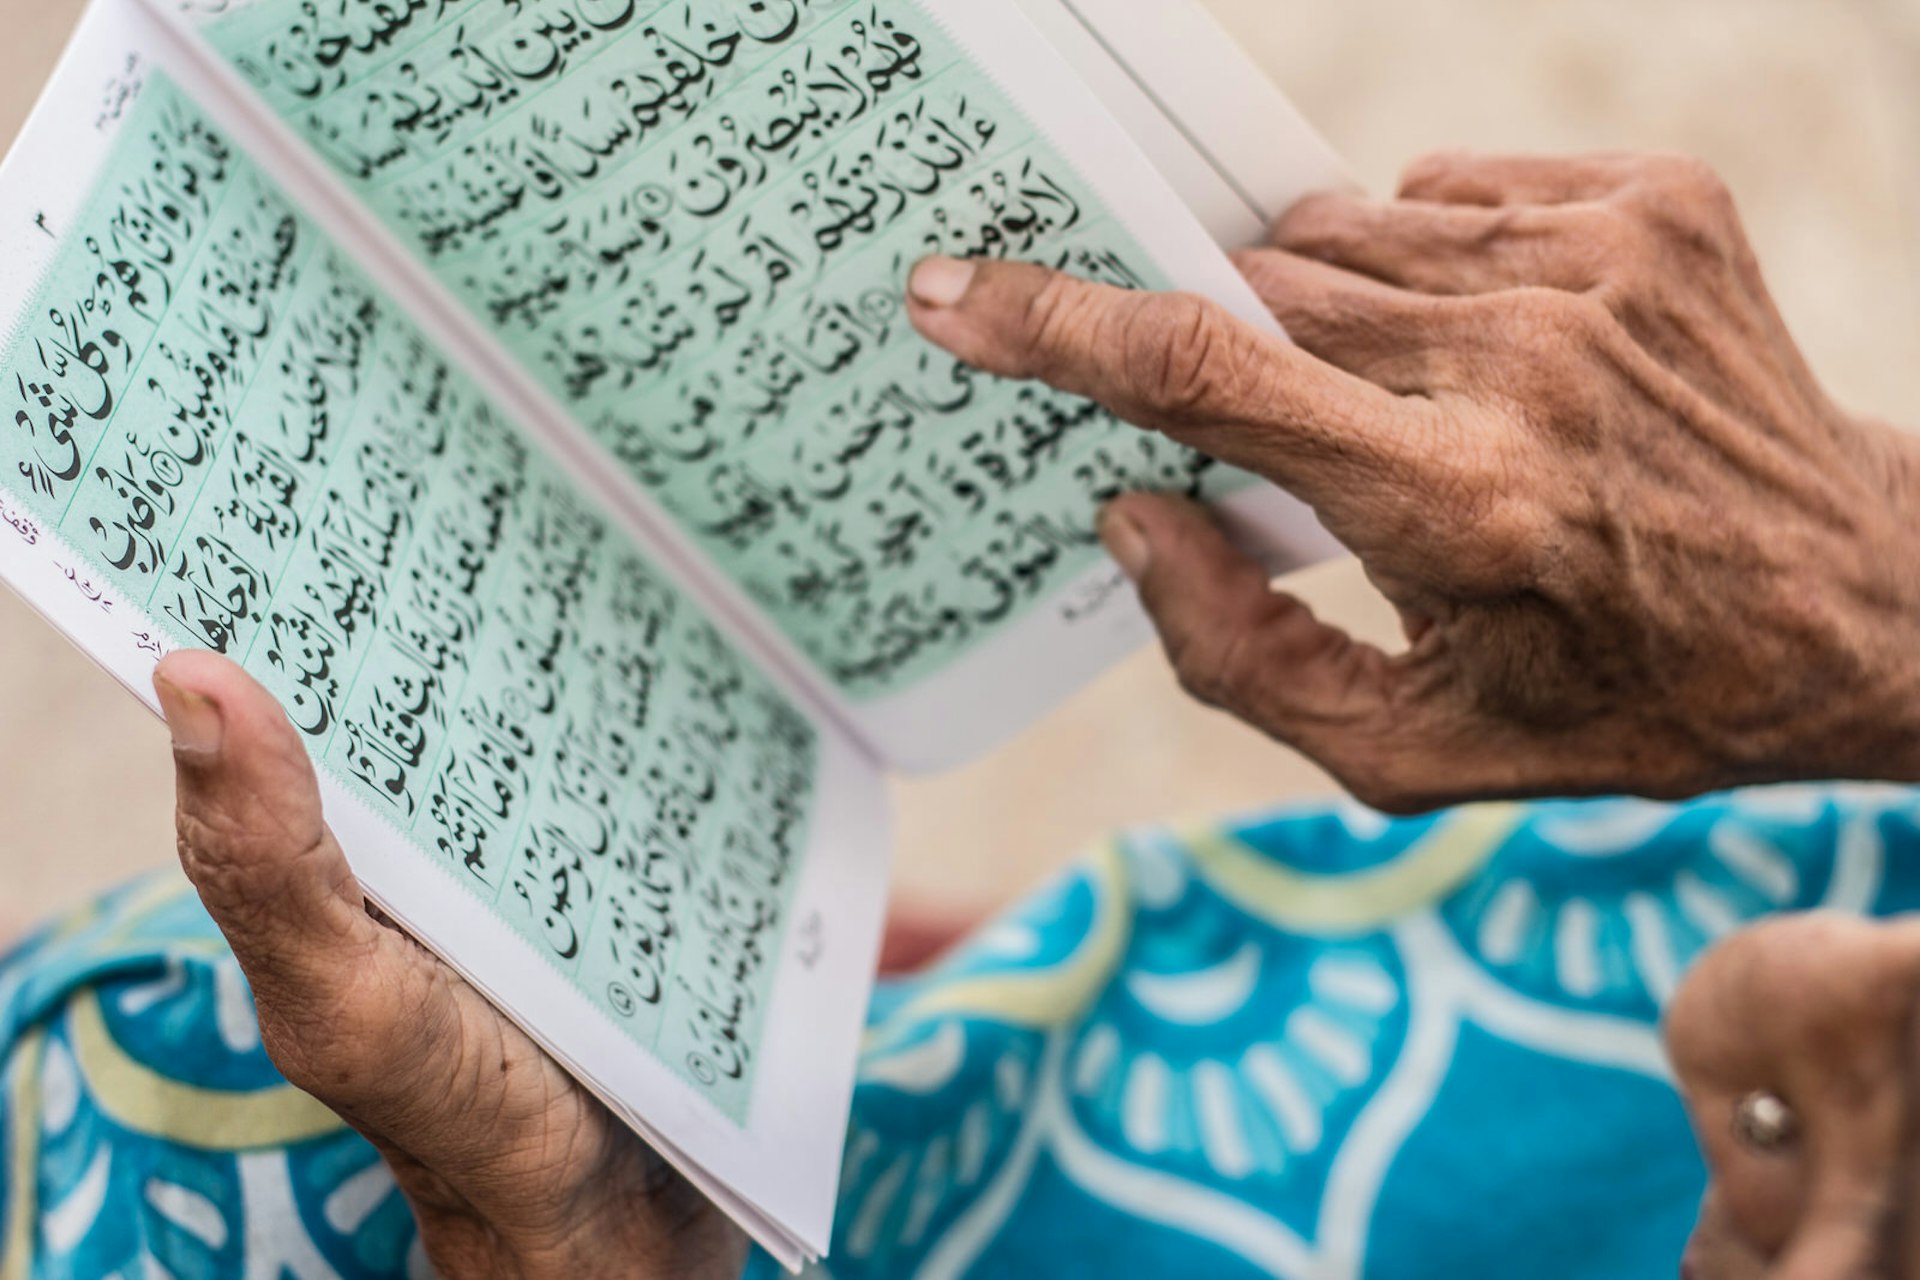 Reading the Islamic holy book. Image by Aliraza Khatri's Photography / Getty